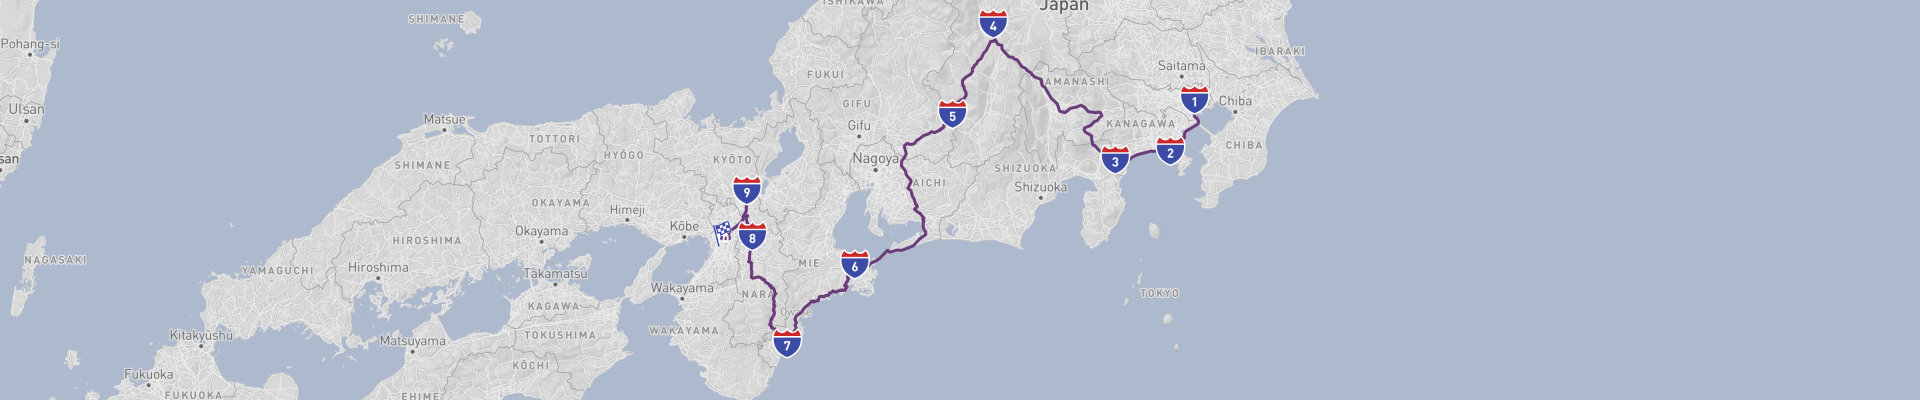 Tokyo to Osaka Road Trip